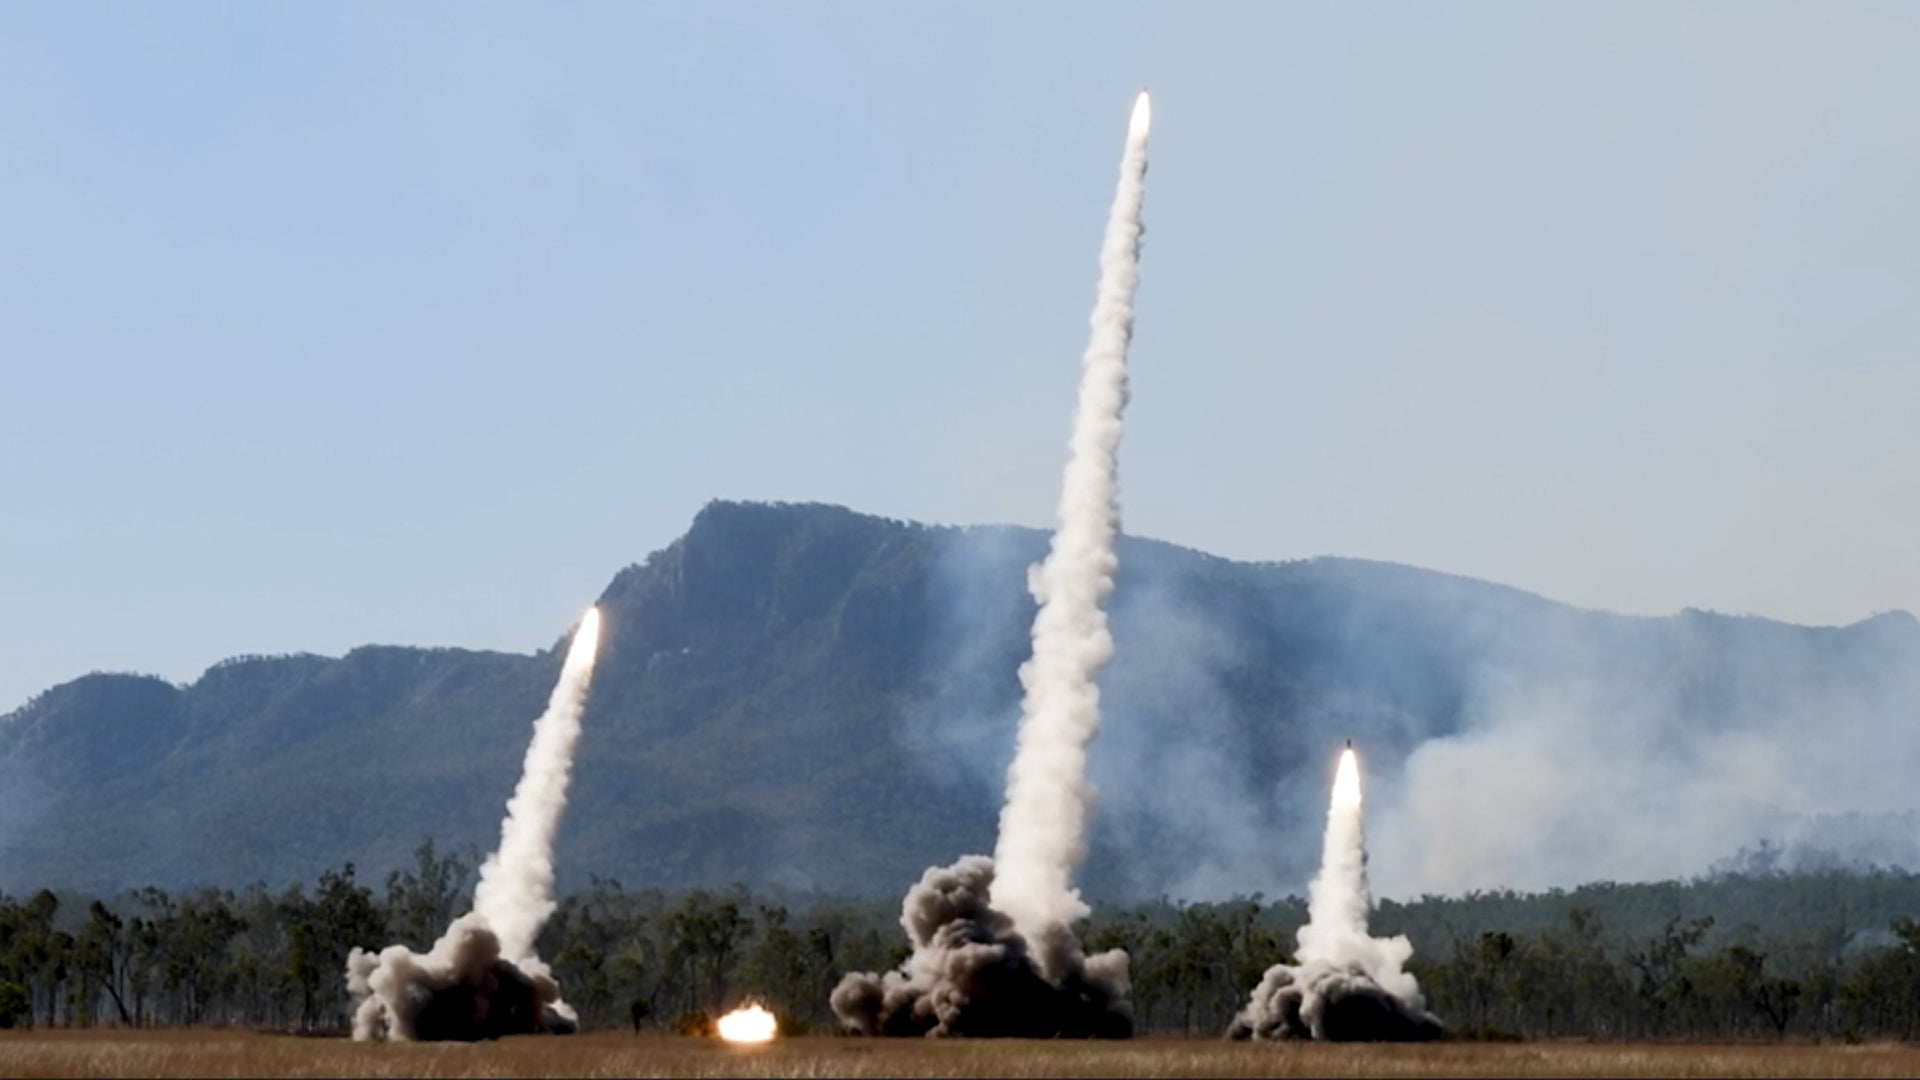 What it looks like when HIMARS rockets launch in super slow motion